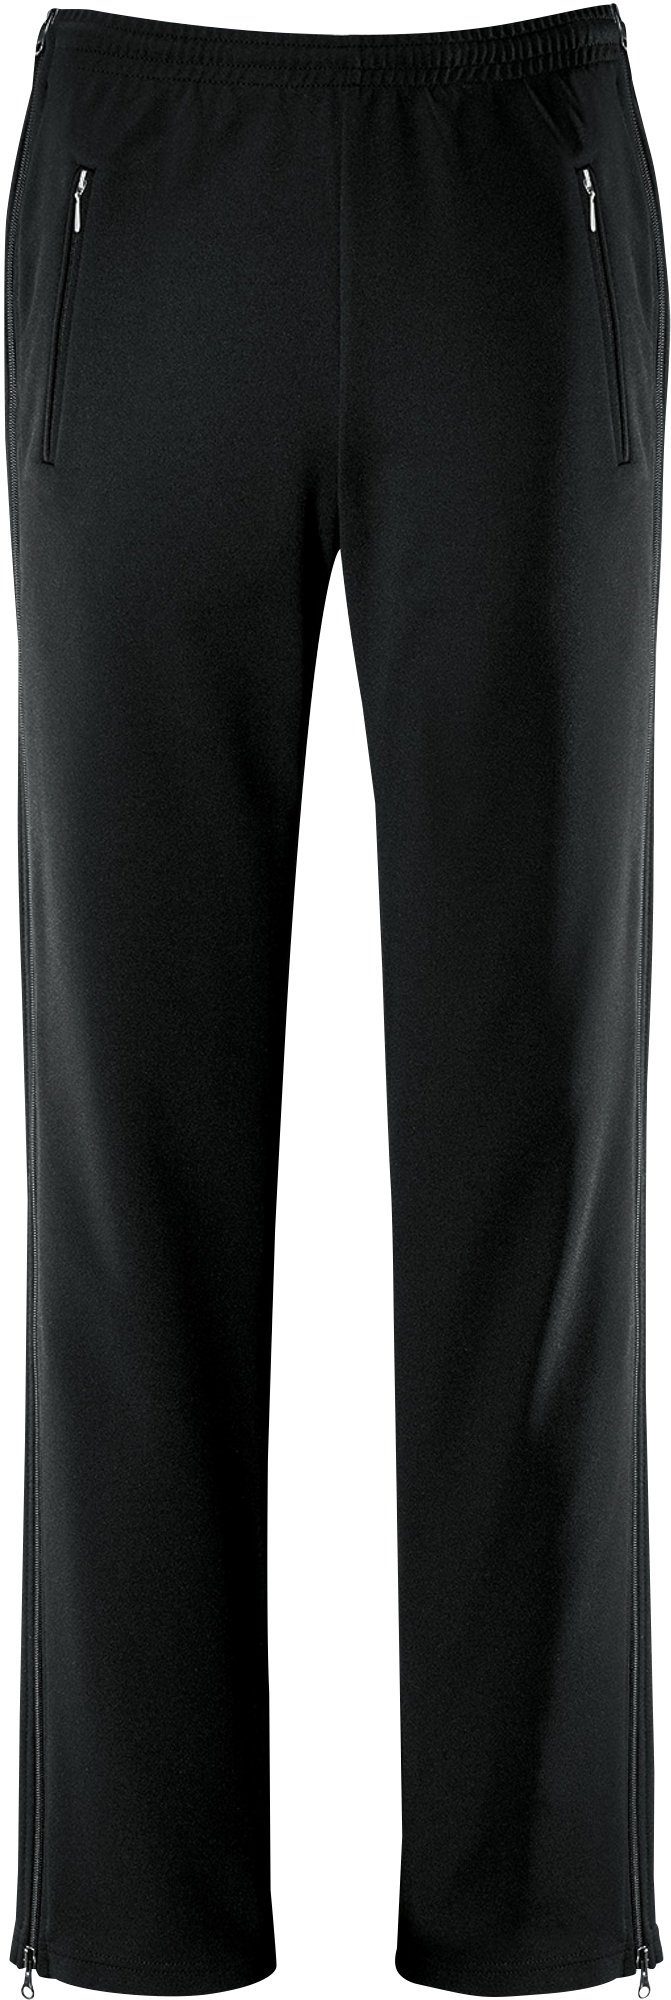 SCHNEIDER Sportswear Jogginghose Damen-Freizeithose "GÖTEBORGW", schwarz Uni lang 999